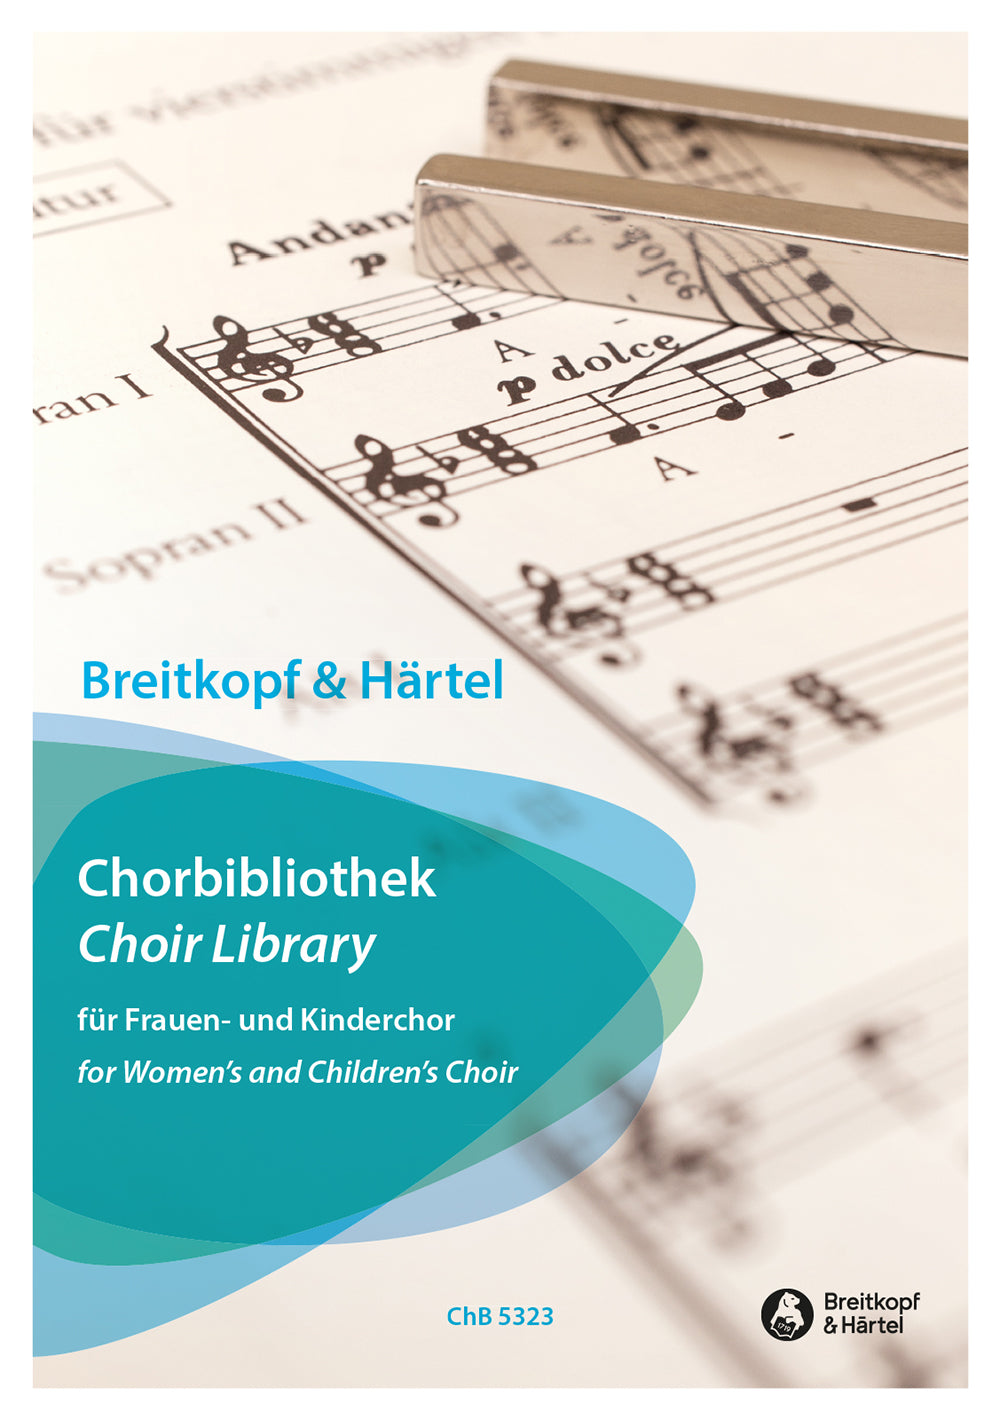 Choir Library for Women's & Children's Choir